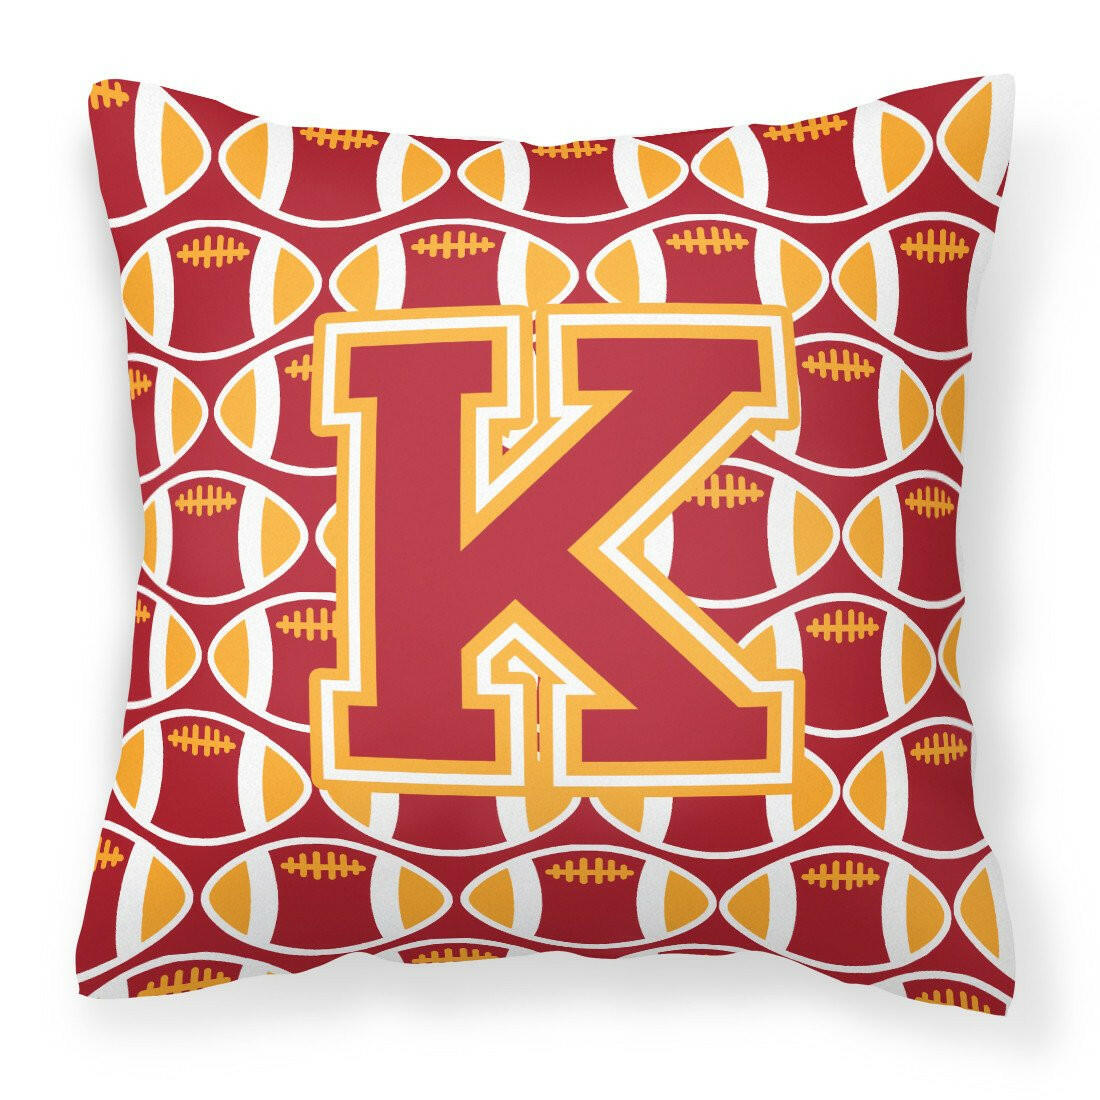 Letter K Football Cardinal and Gold Fabric Decorative Pillow CJ1070-KPW1414 by Caroline's Treasures